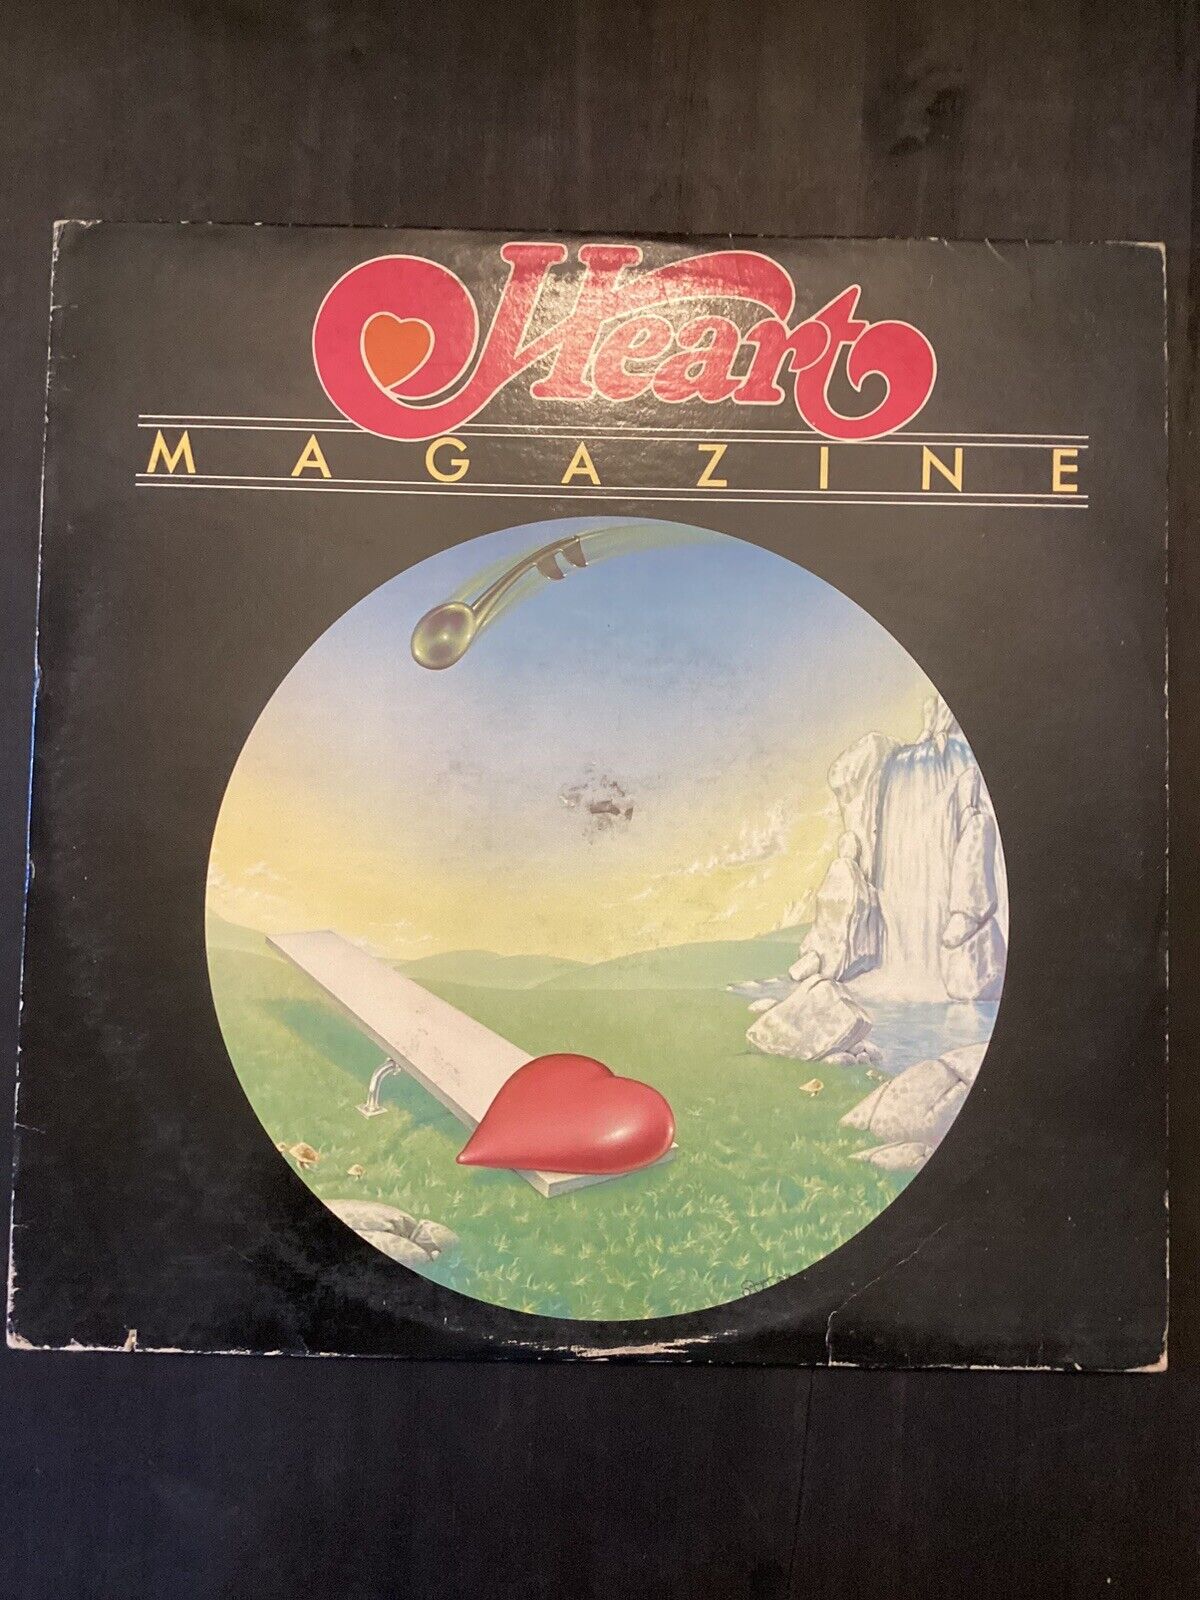 Heart Magazine Original 1977 Mushroom Records Pressing MRS-5008